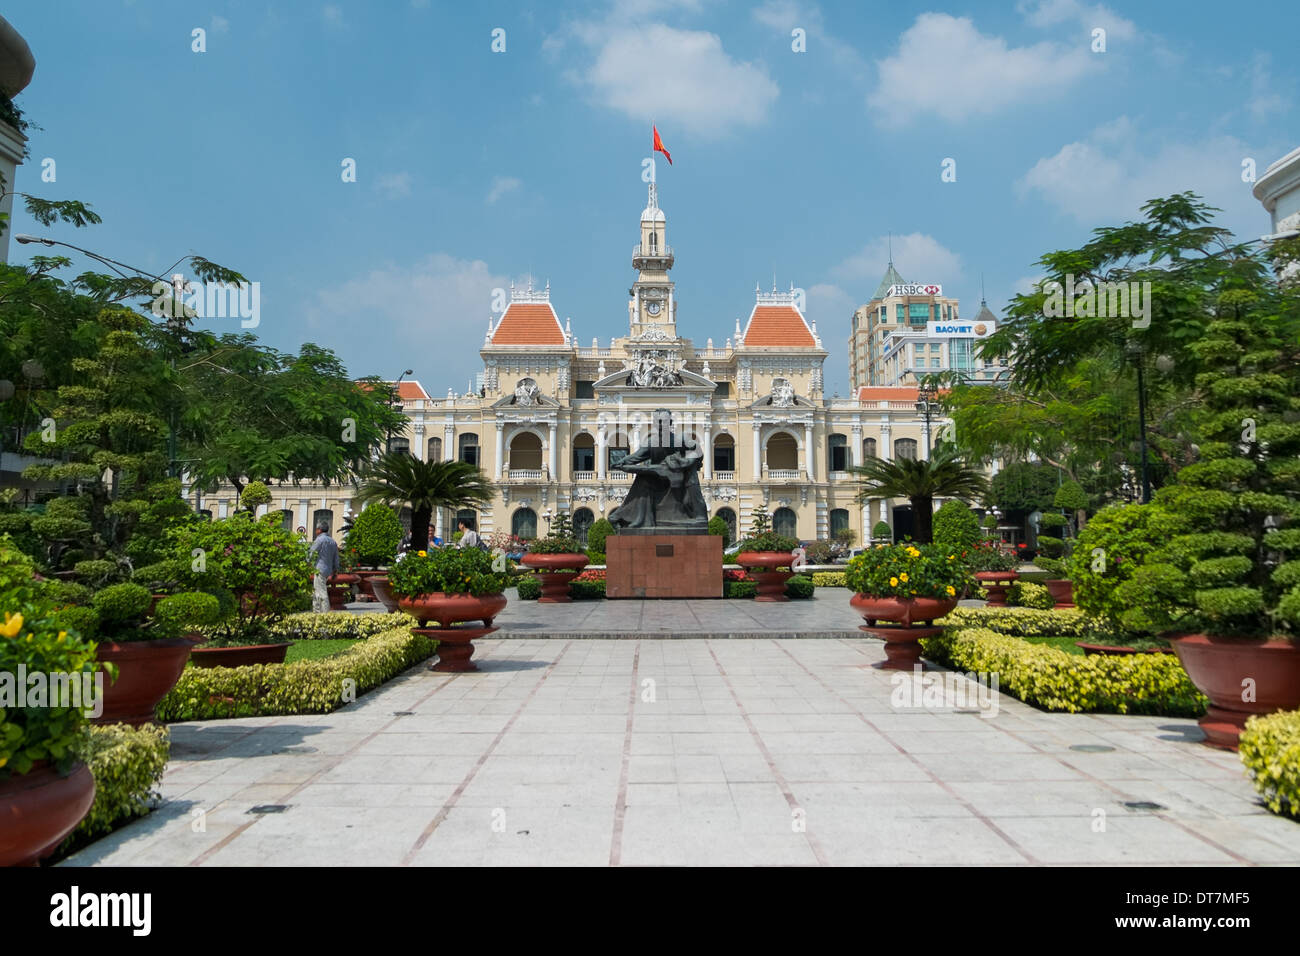 HO CHI MINH CITY, VIETNAM - 24 Januar: das Volkskomitee Gebäude Hochiminh Stadt mit Ho Chi Minhs Statue vor. In Stockfoto